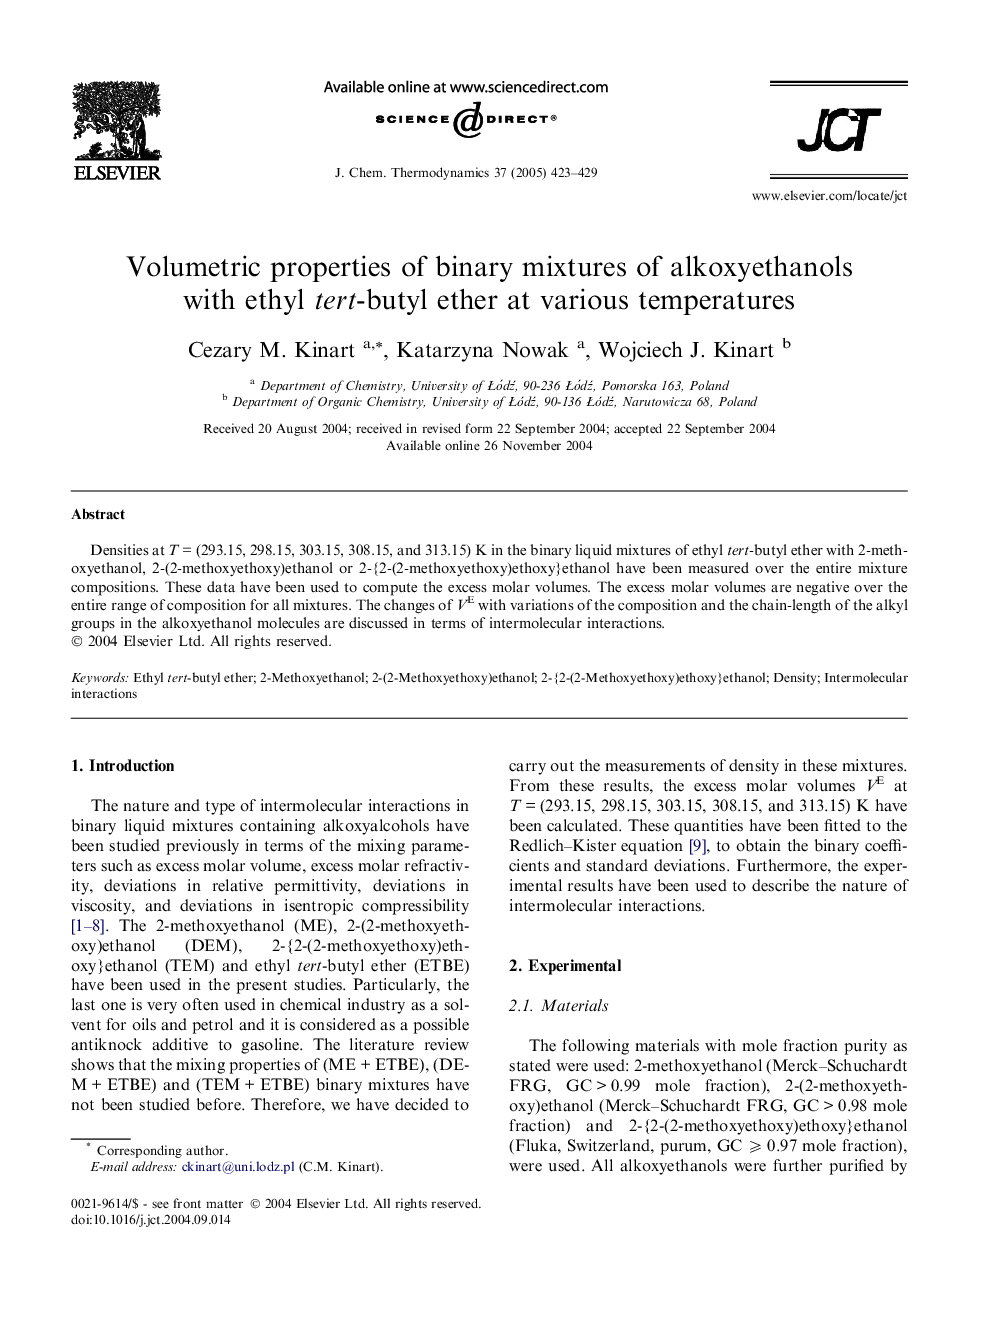 Volumetric properties of binary mixtures of alkoxyethanols with ethyl tert-butyl ether at various temperatures